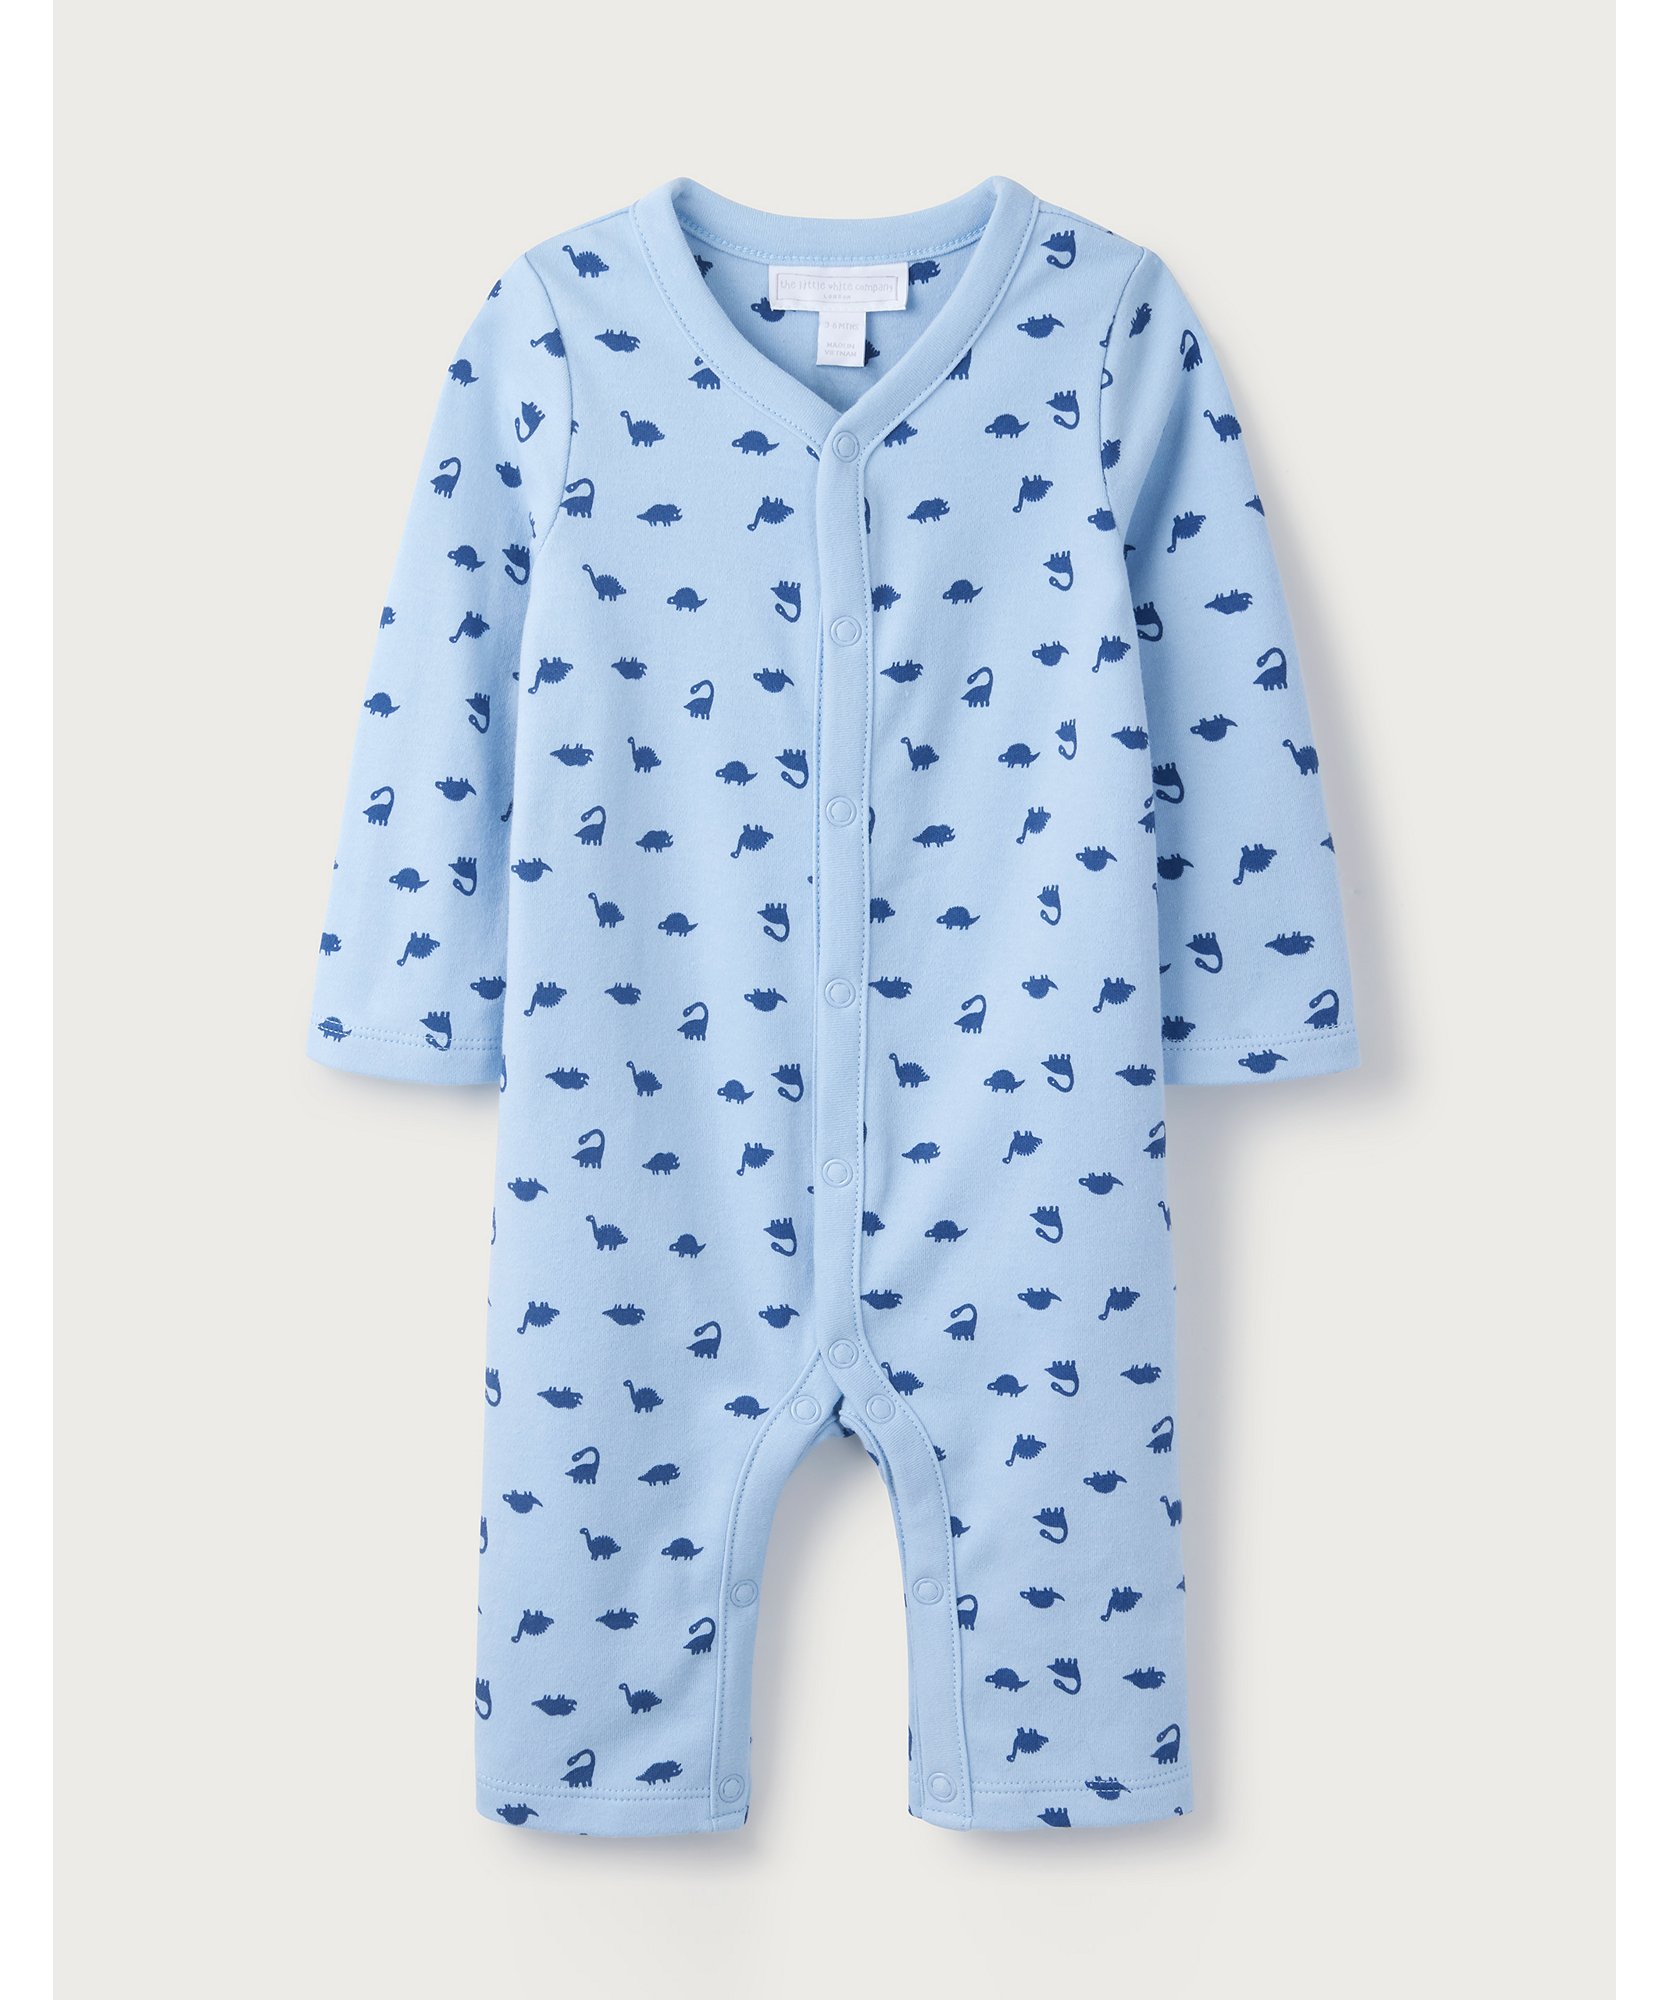 Dino-Print Sleepsuit The White Company Clothing Loungewear Sleepsuits Newborn 